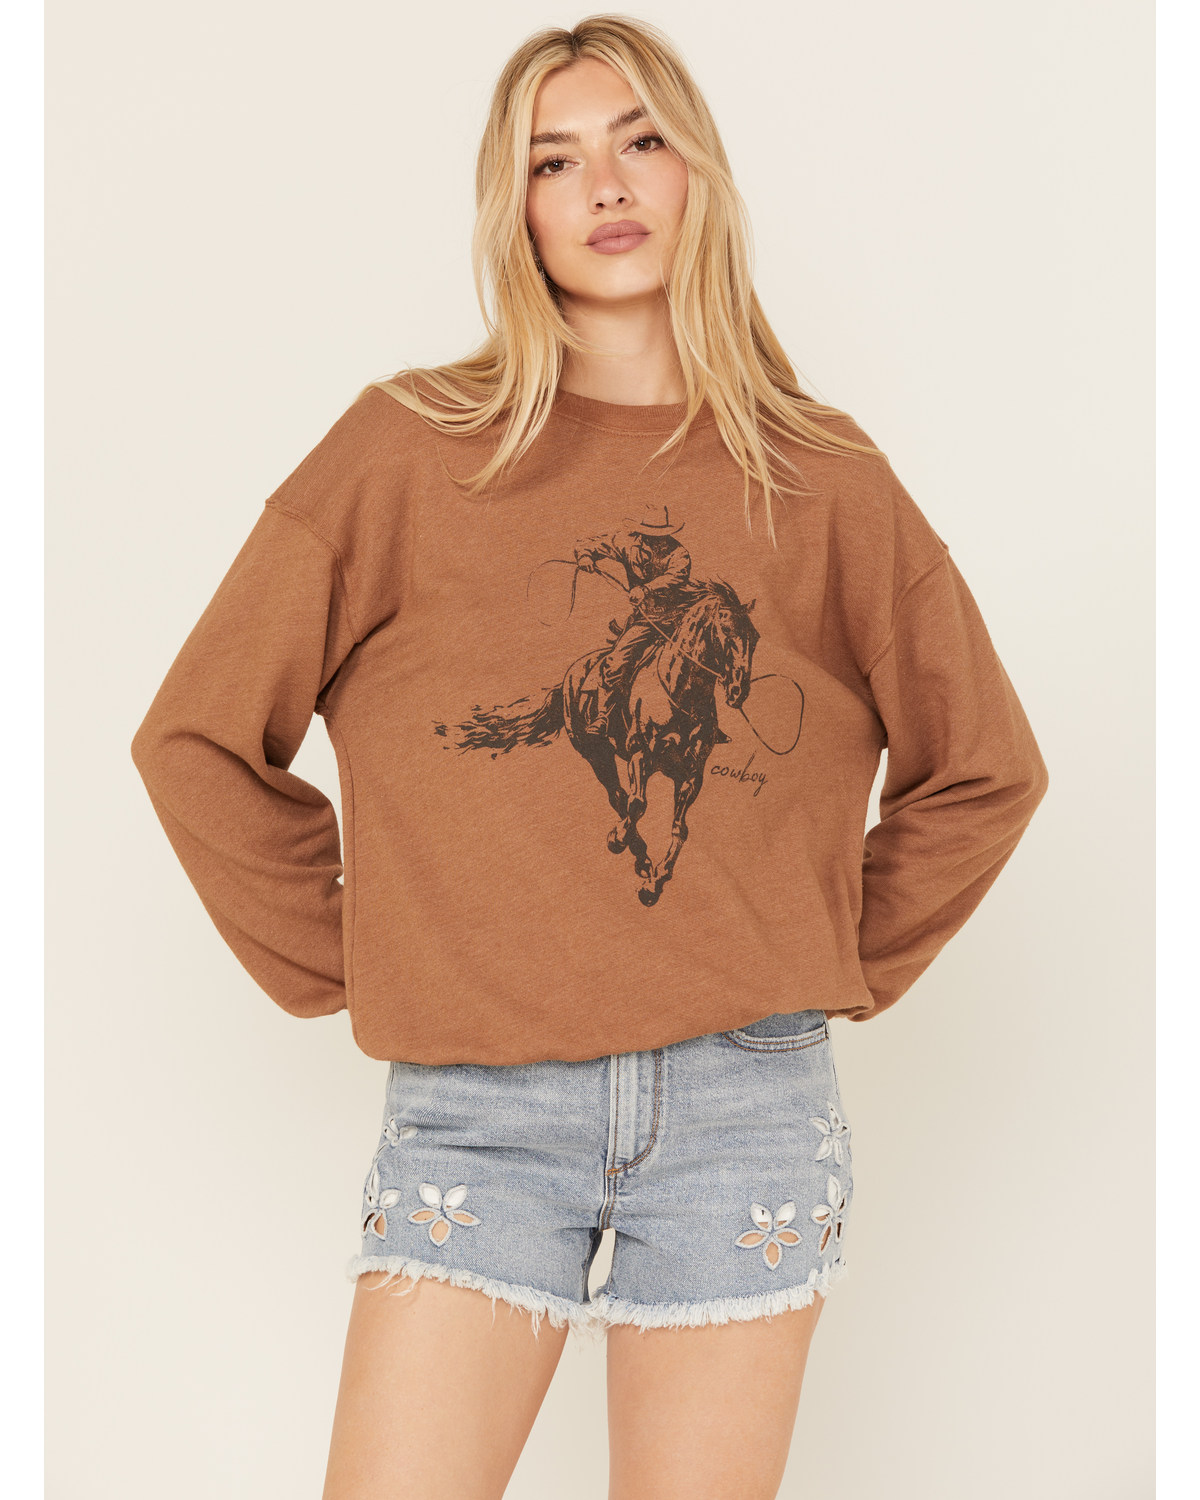 La Land Women's Cowboy Graphic Crewneck Sweatshirt